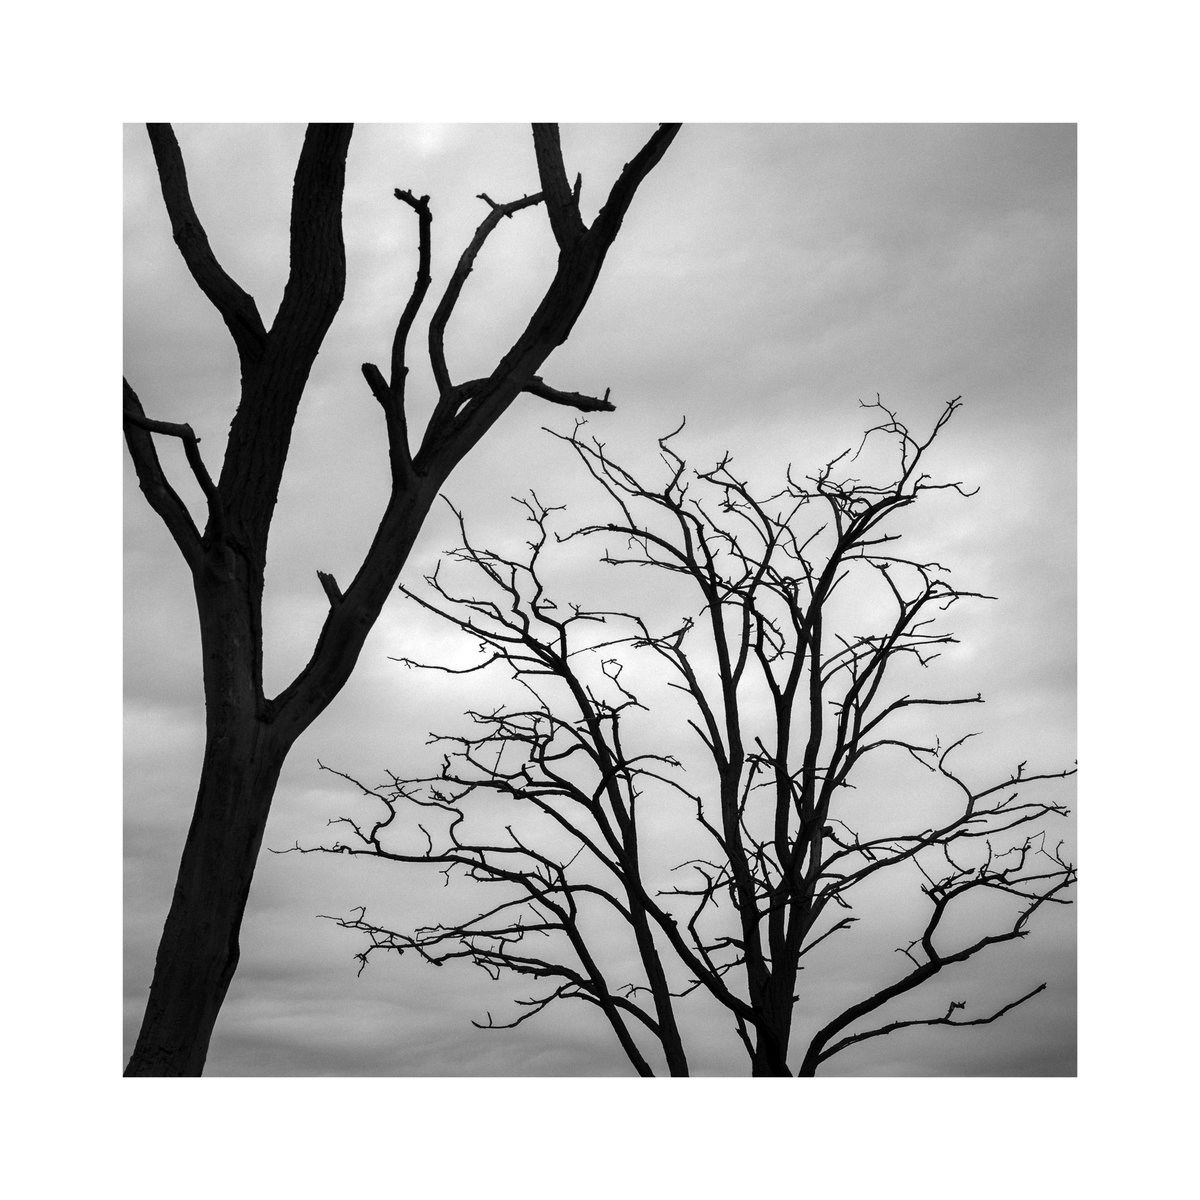 Dead Trees, Buckinghamshire. 

#photography #monochrome #bnw